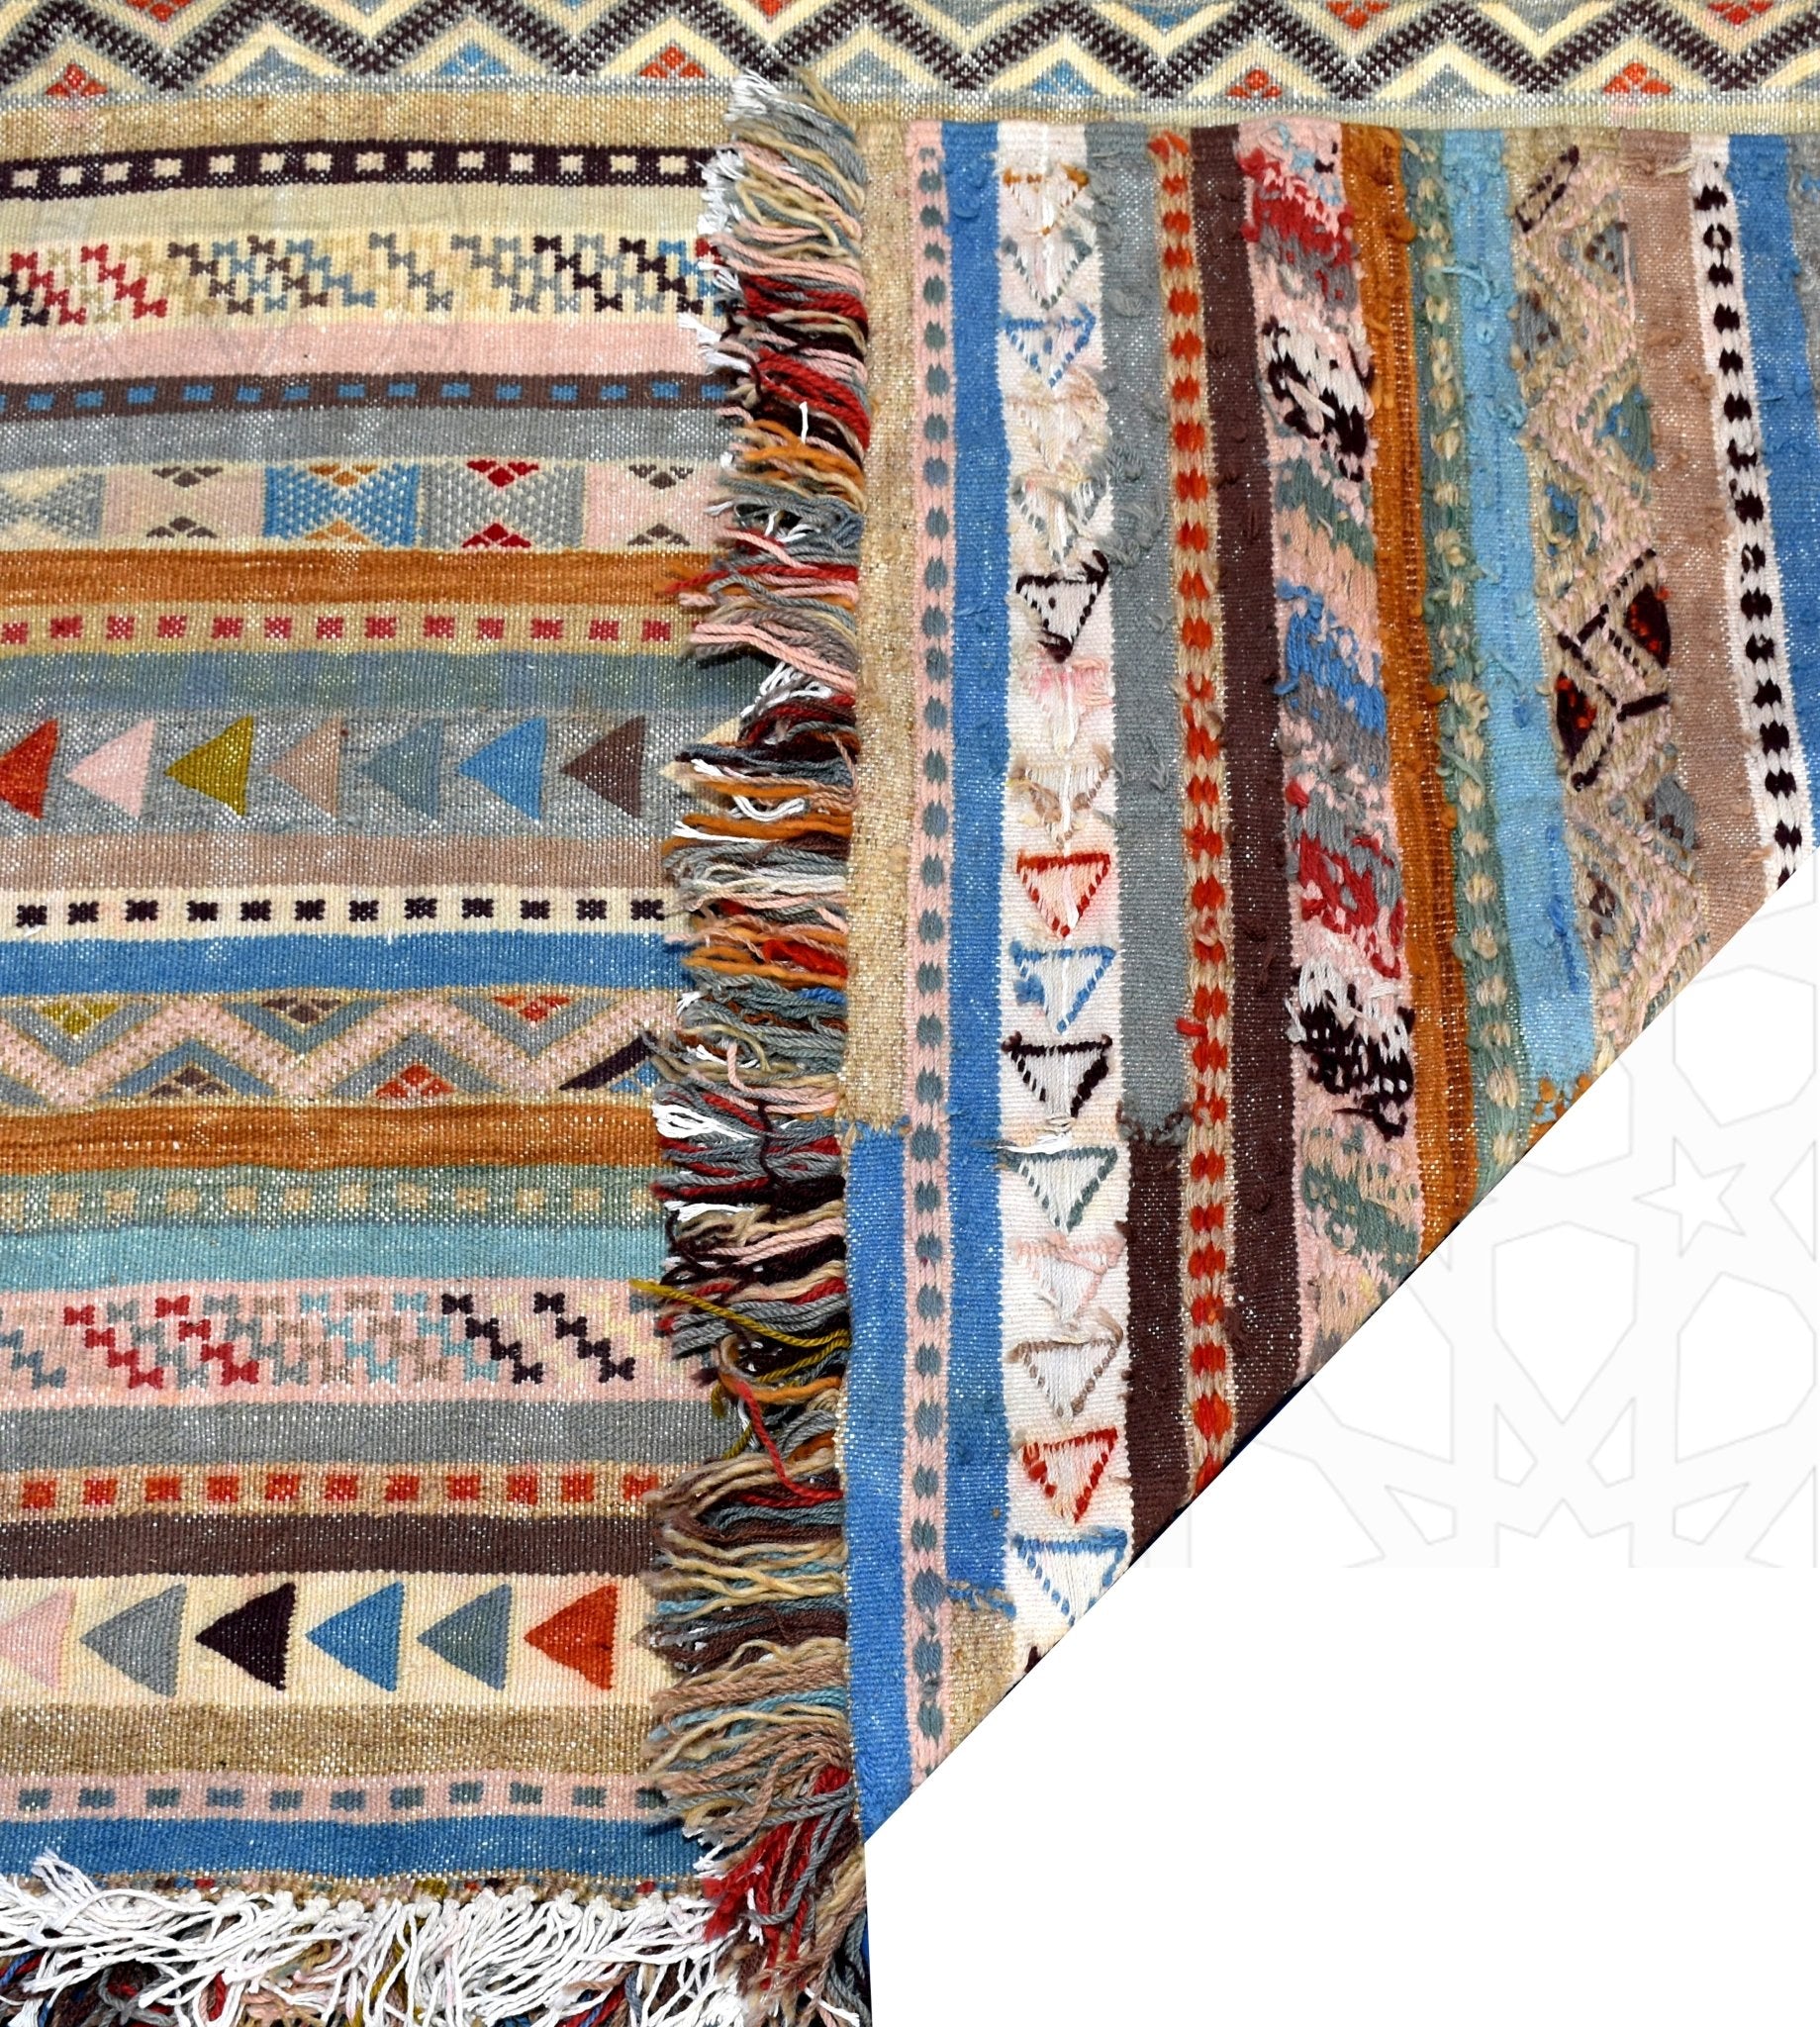 Flatweave kilim hanbal Moroccan rug - 4.27 x 6.9 ft / 130 x 210 cm - Berbers Market